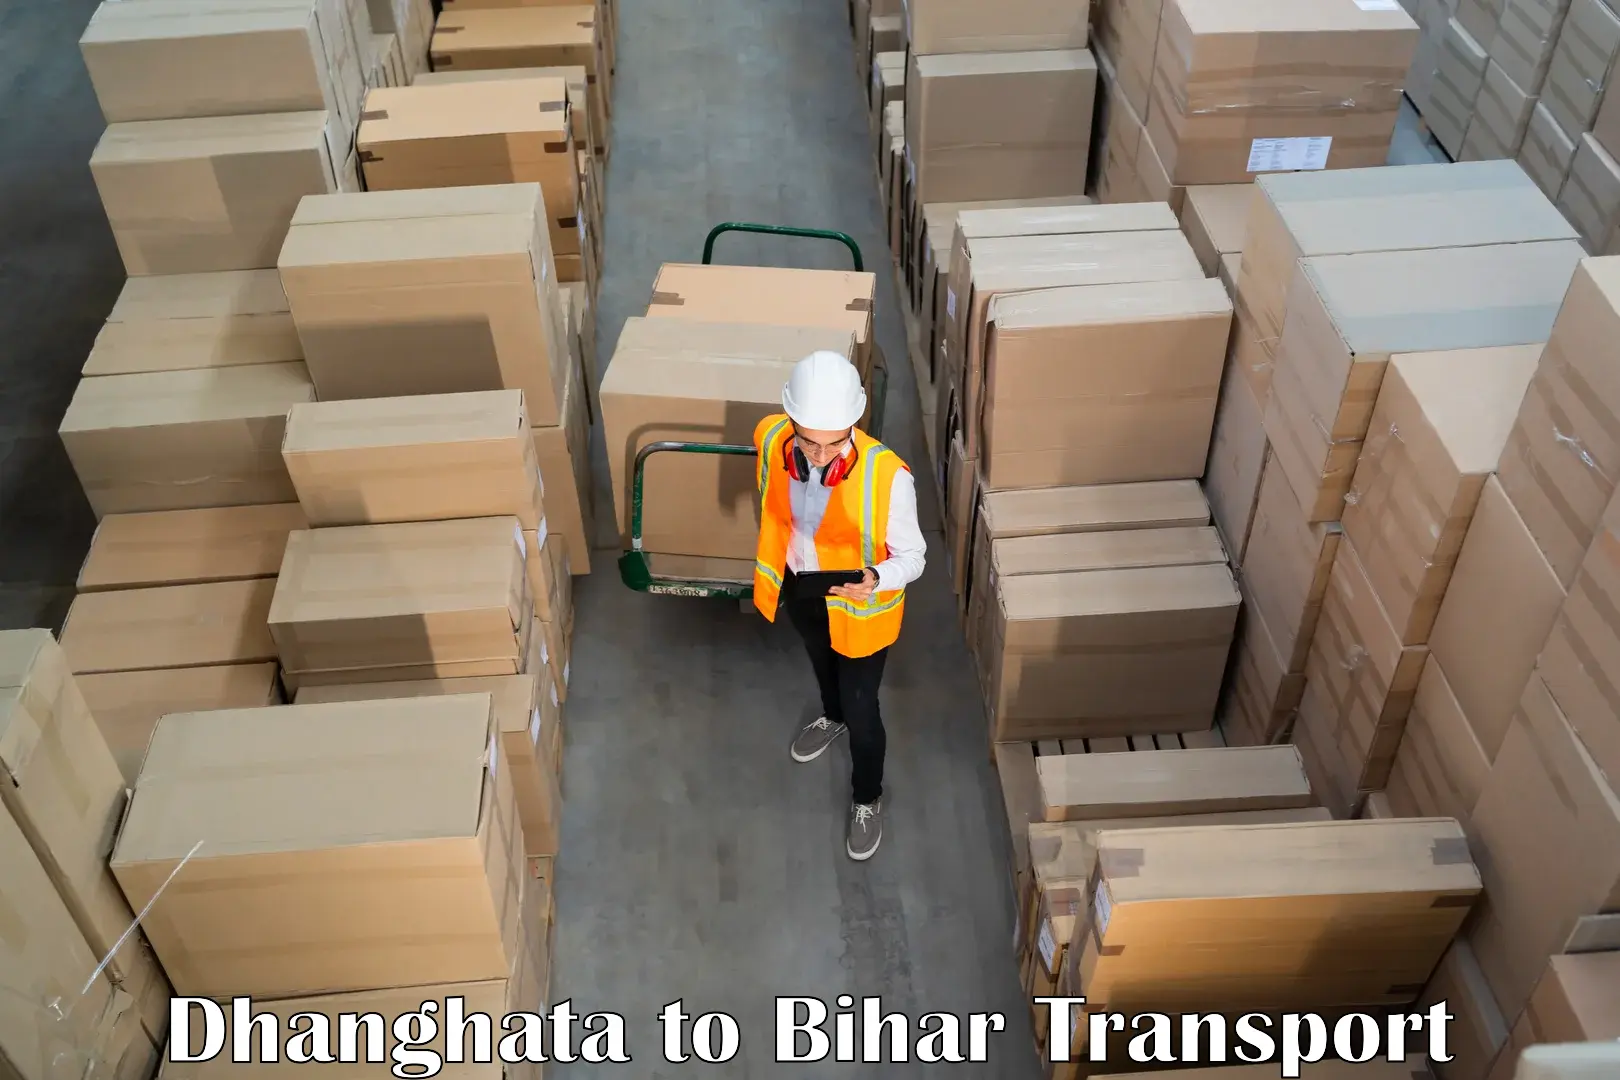 Shipping partner Dhanghata to Katoria